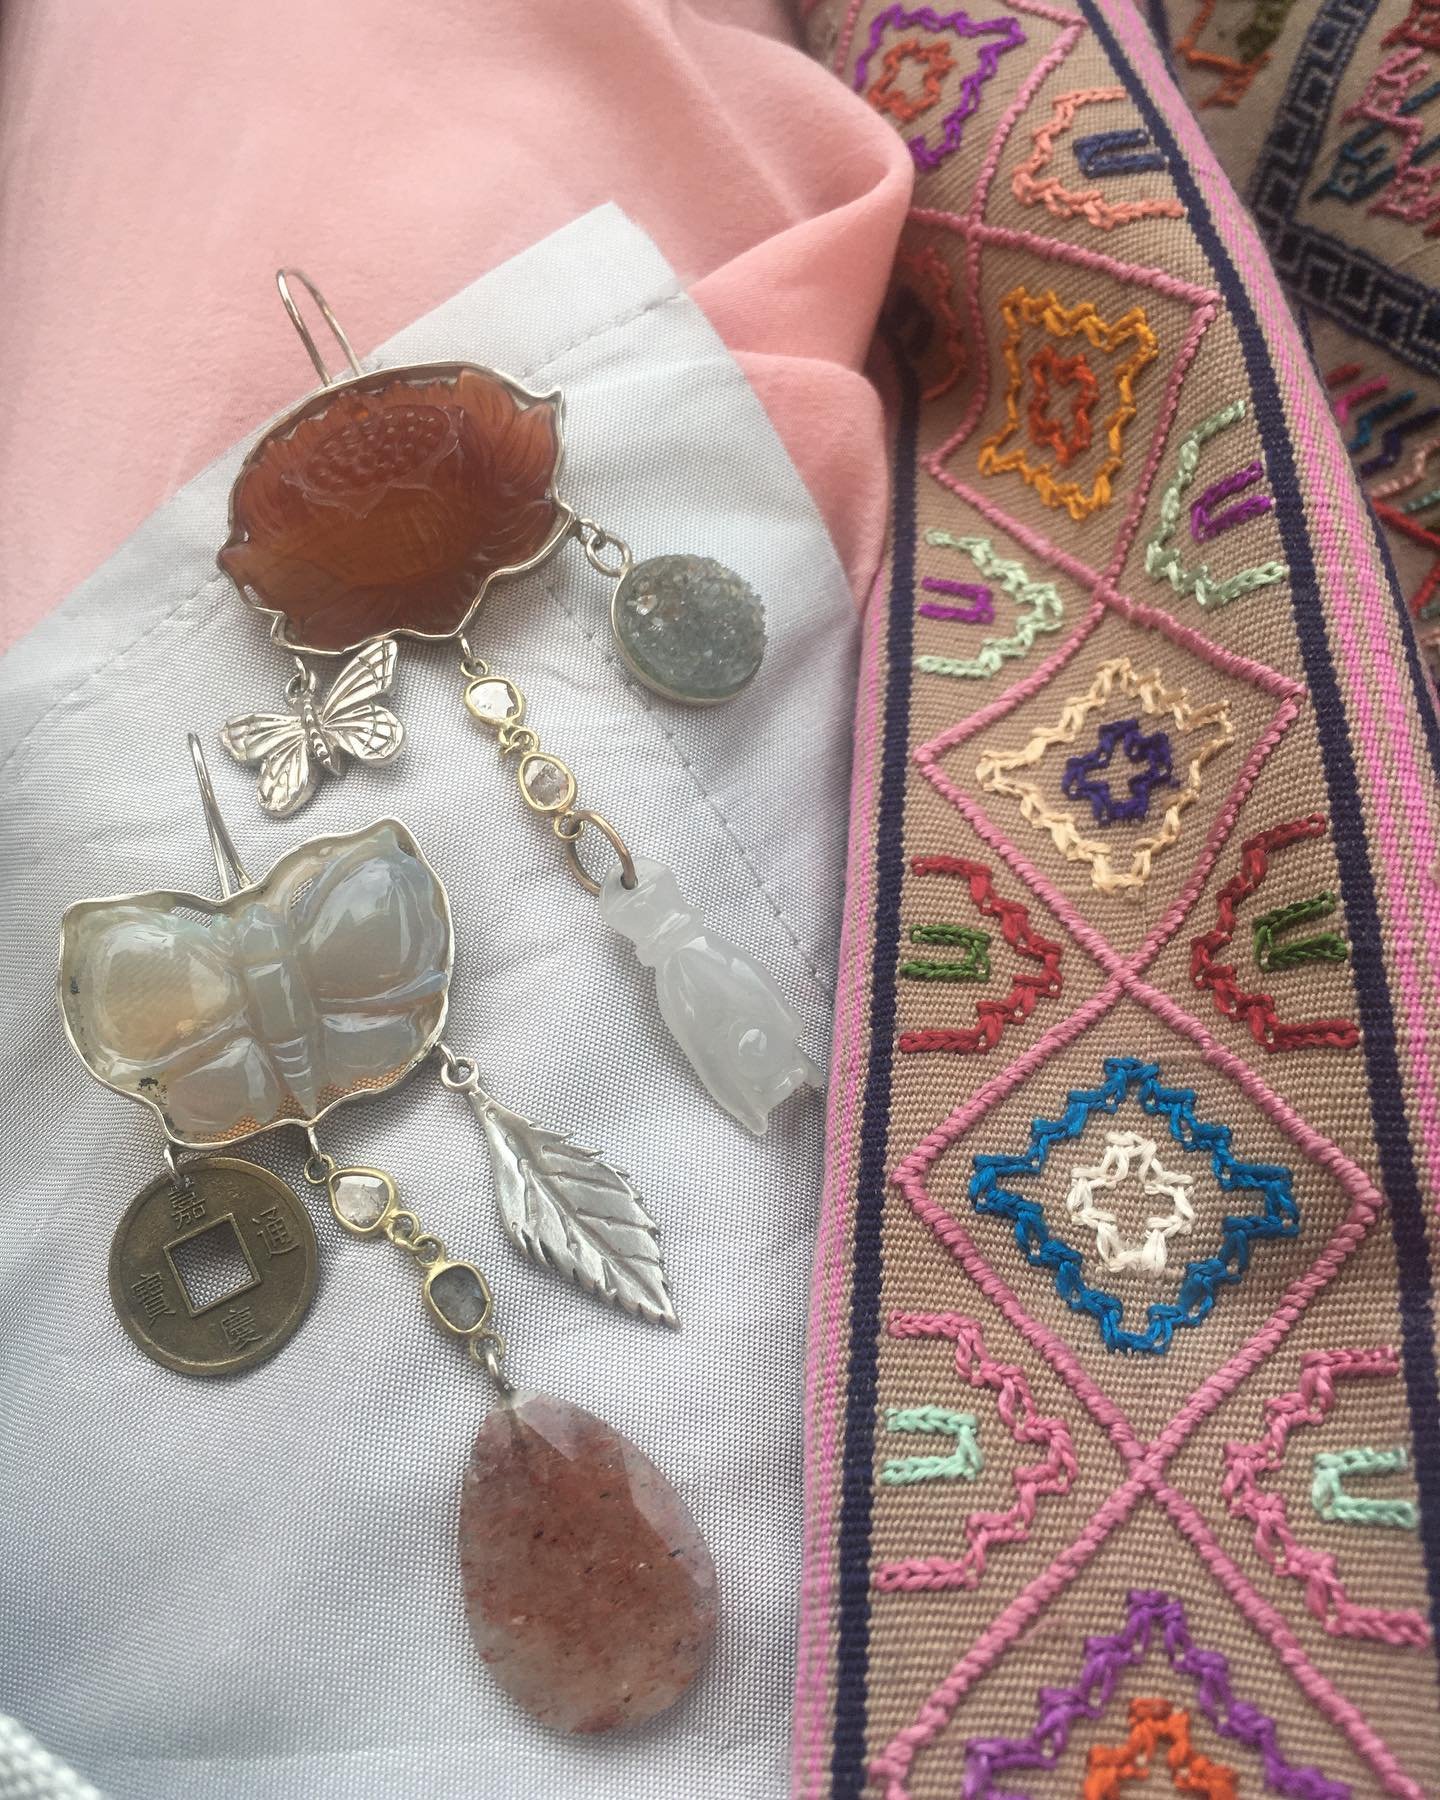 Nostalgia revisiting my treasures 
-
-
-
#earrings #hangingearrings #chandelierearrings #reimagine #reuse #recycle #collected #broken #unwanted #redesigned #recreated #sterlingsilver #18k #gold #cerneol #opal #rutilequartz #diamond #oneofakindjewelry